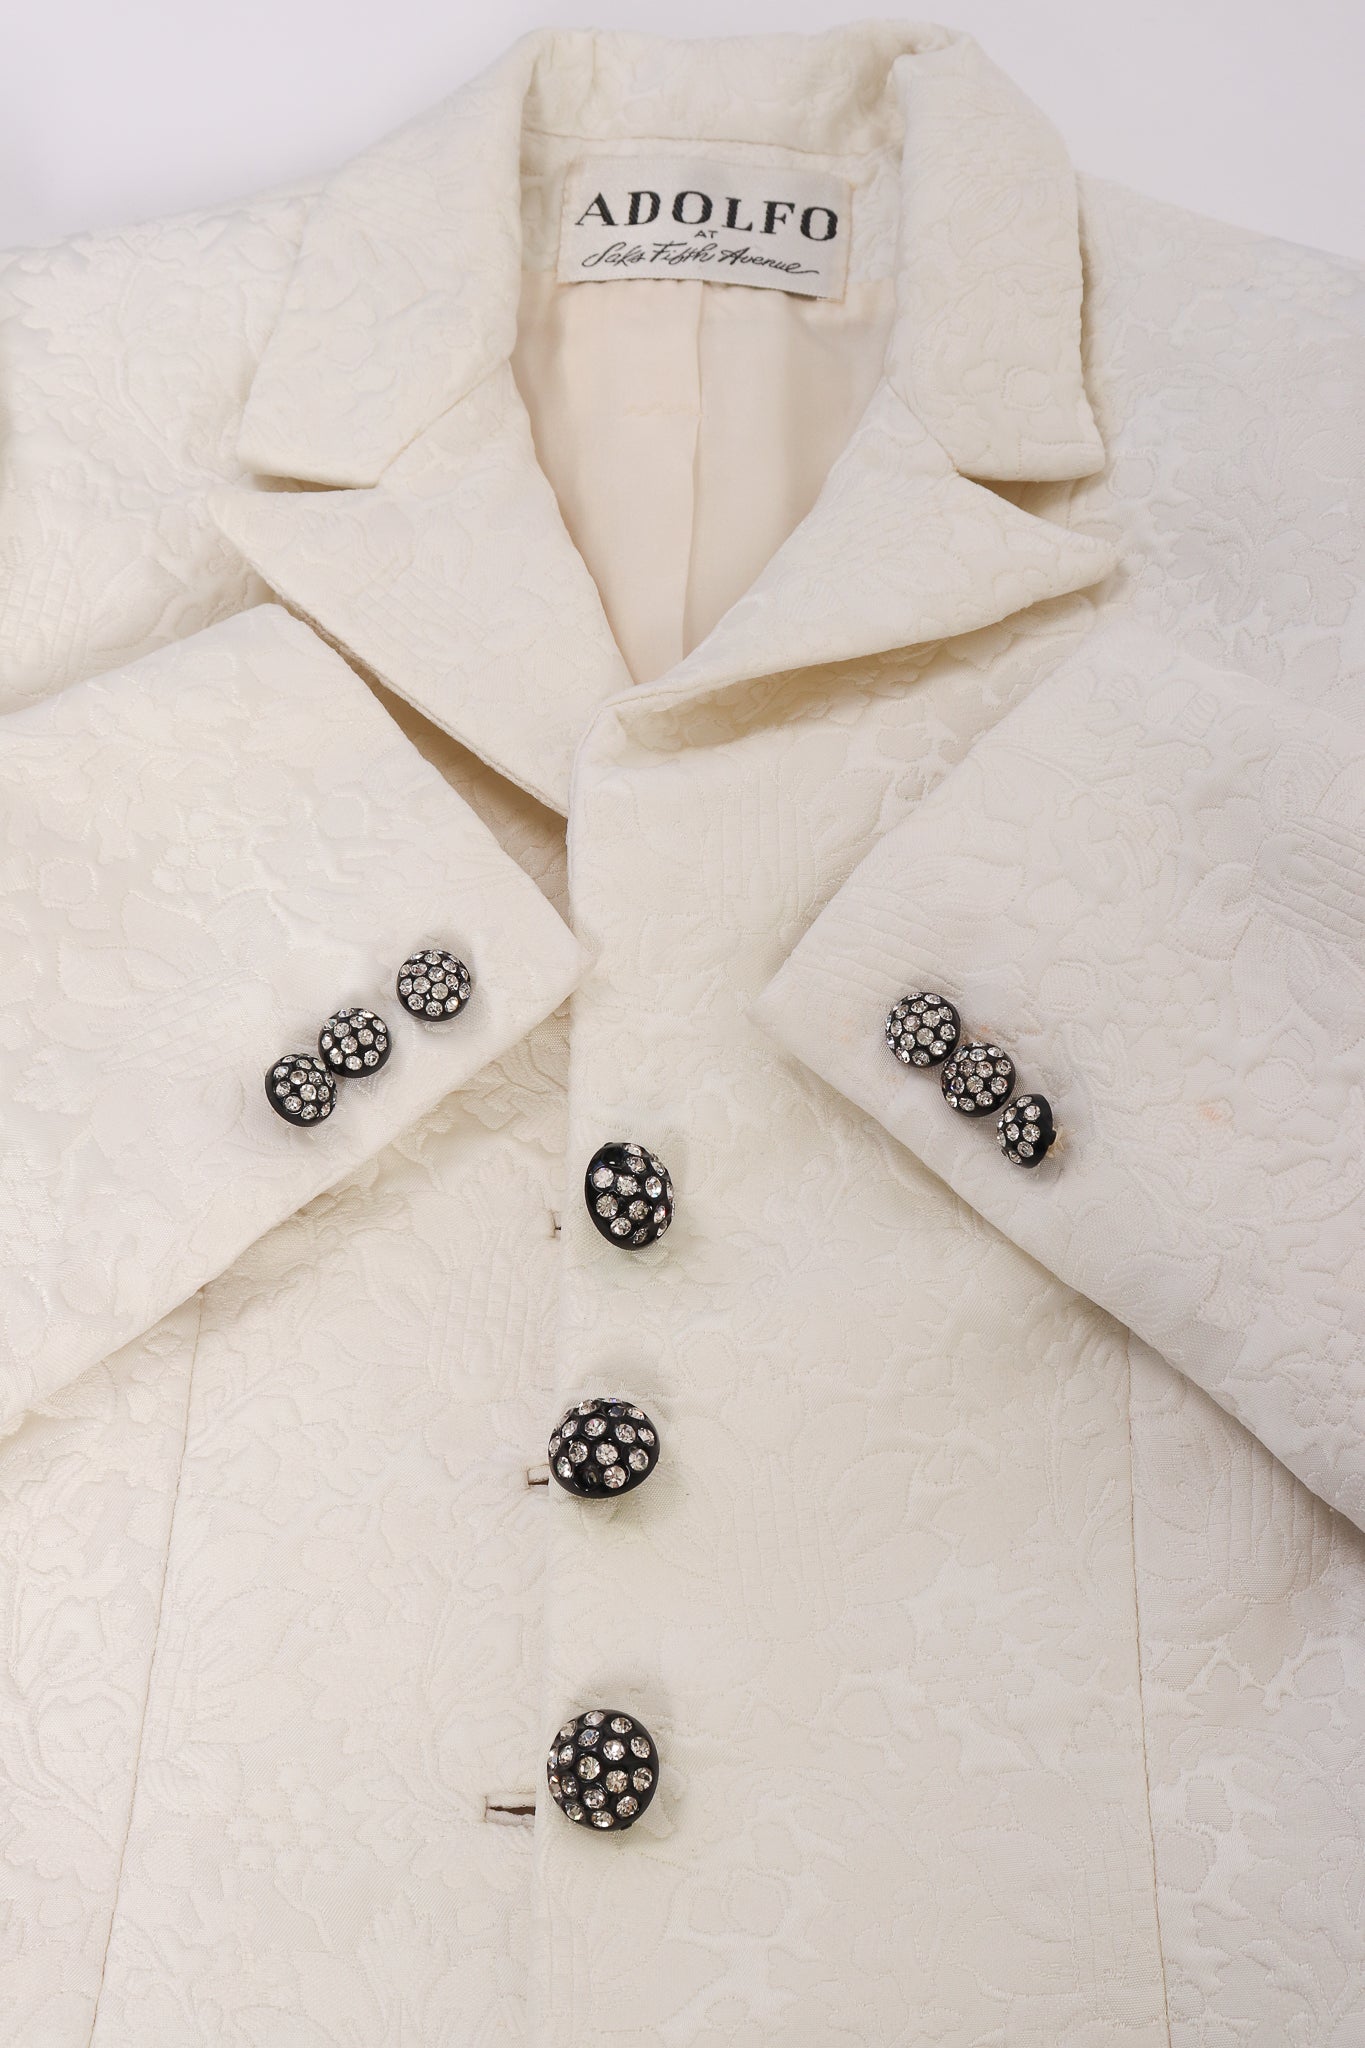 Vintage Adolfo Shrunken Brocade Bridal Wedding Jacket front detail at Recess Los Angeles